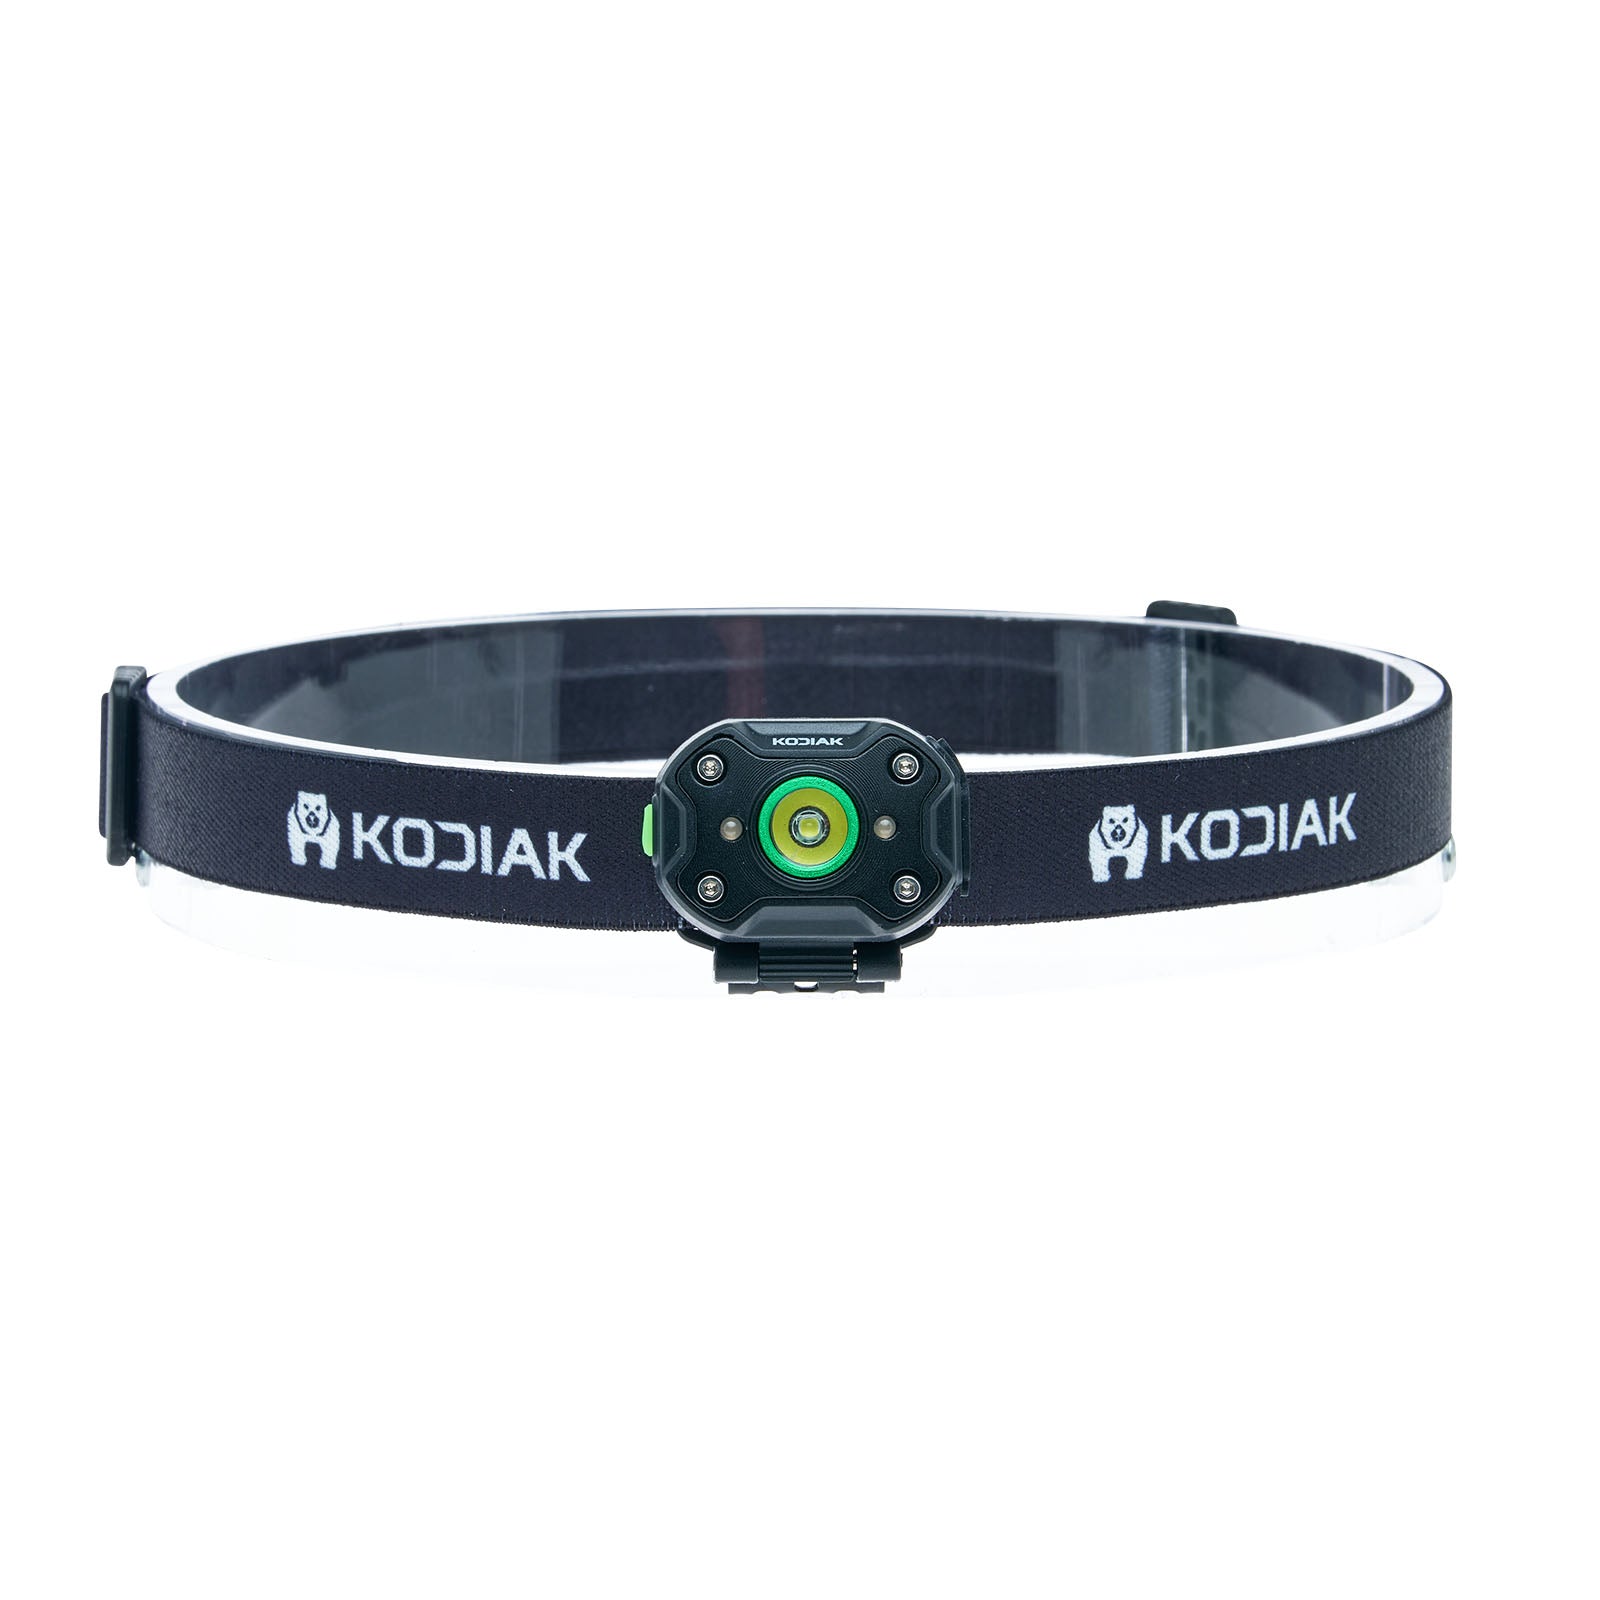 Kodiak® KIP® Rechargeable Micro Headlamp